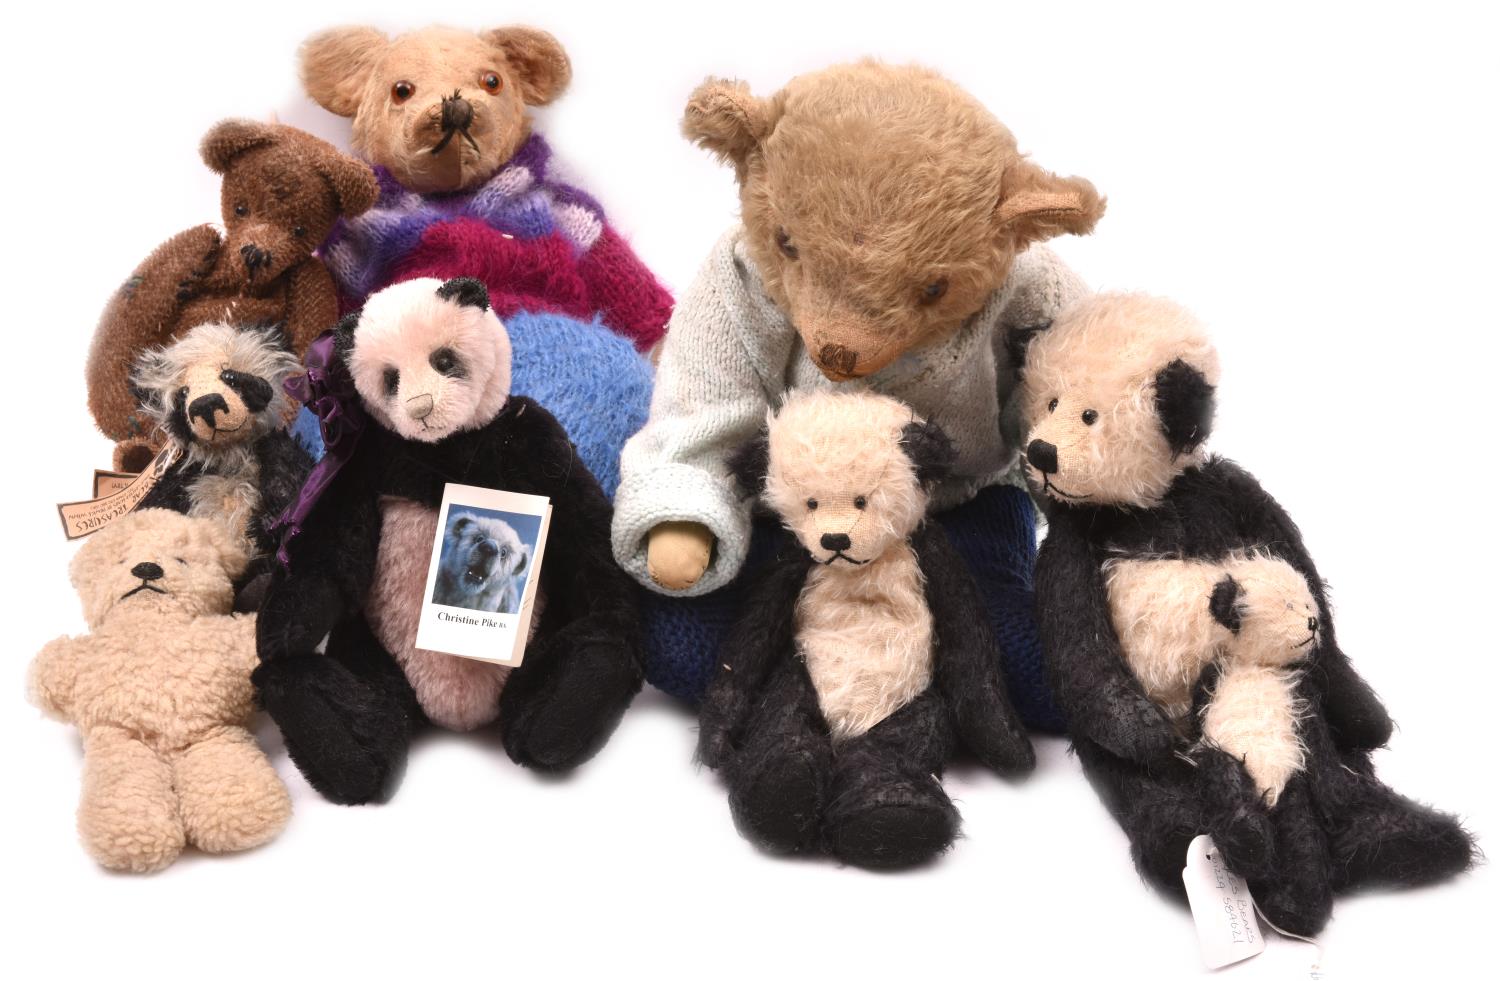 8x small Teddy Bears by various makes, including several handmade/short production run bears. 5x